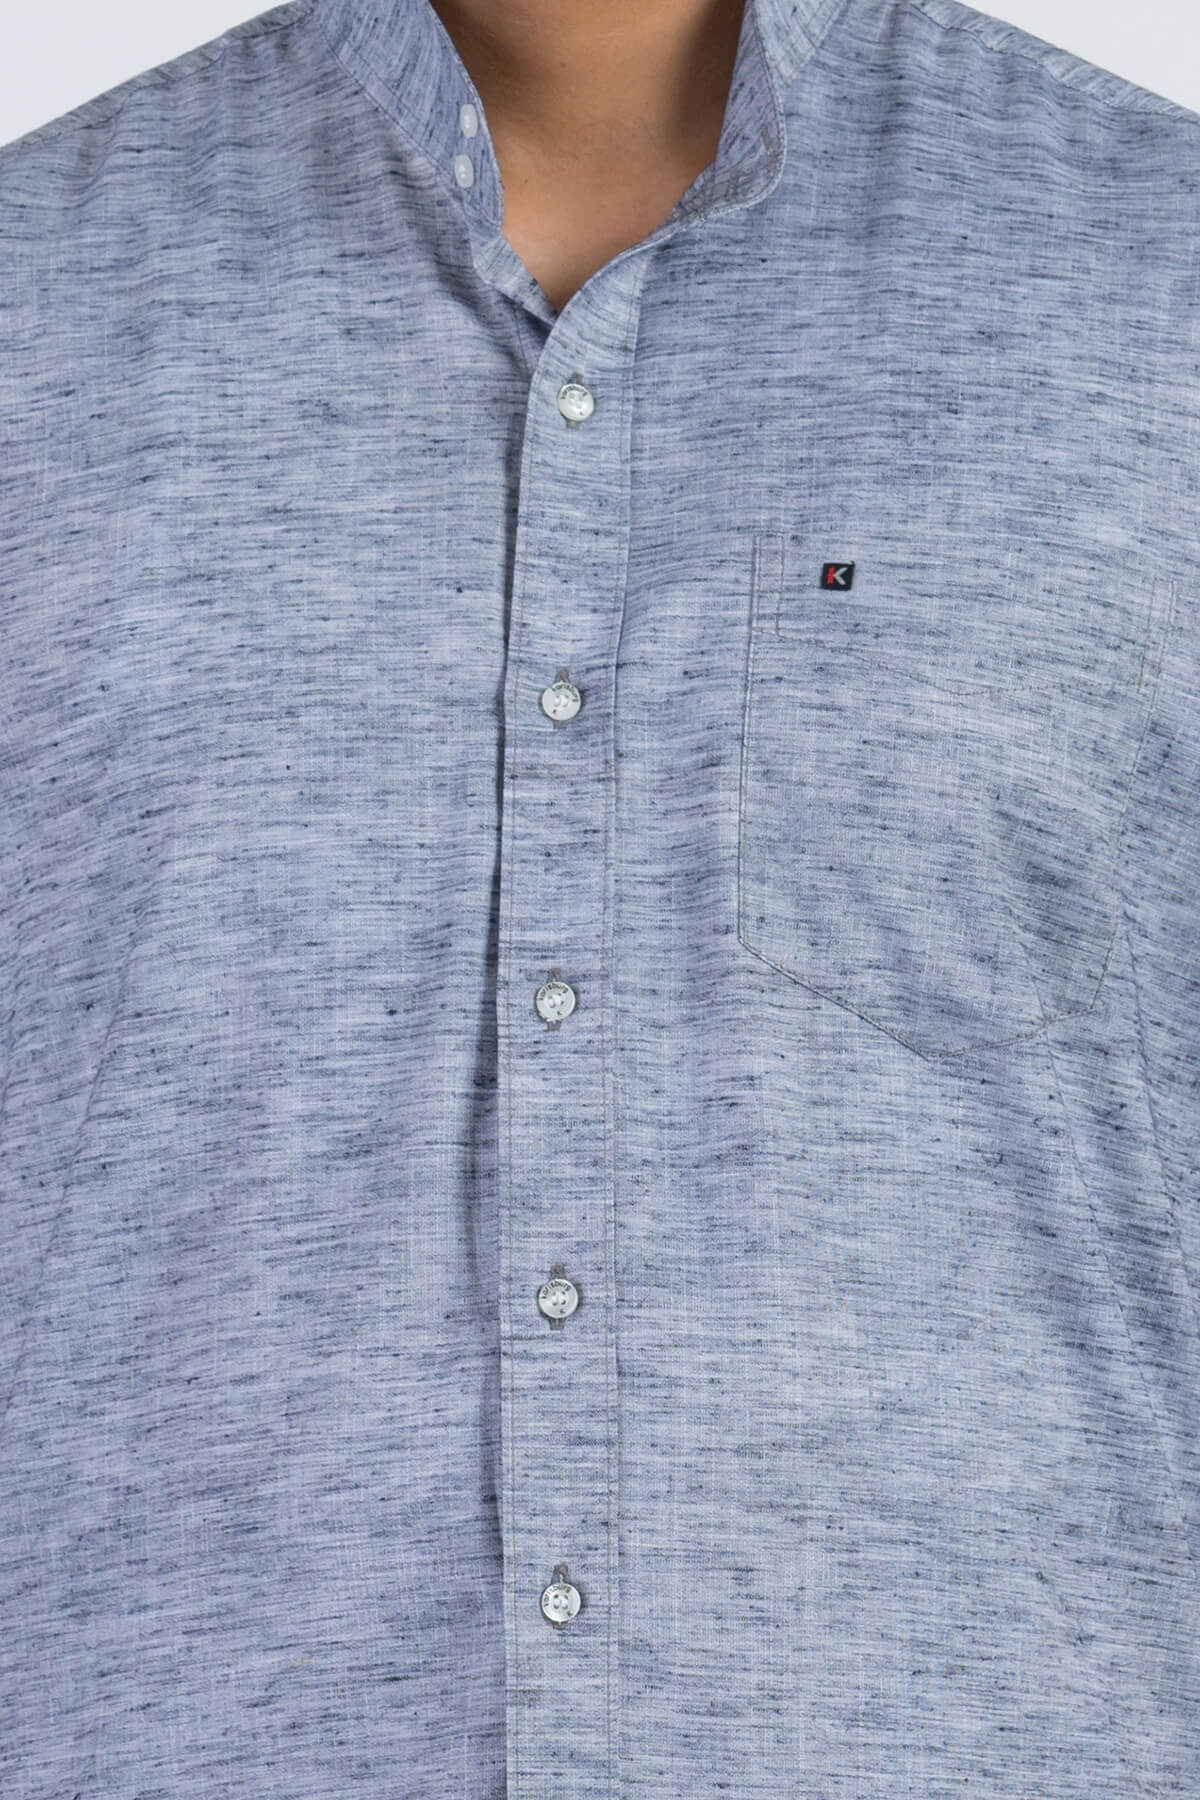 Combo Men's Premium Cotton Dhoti with Grey Shirt